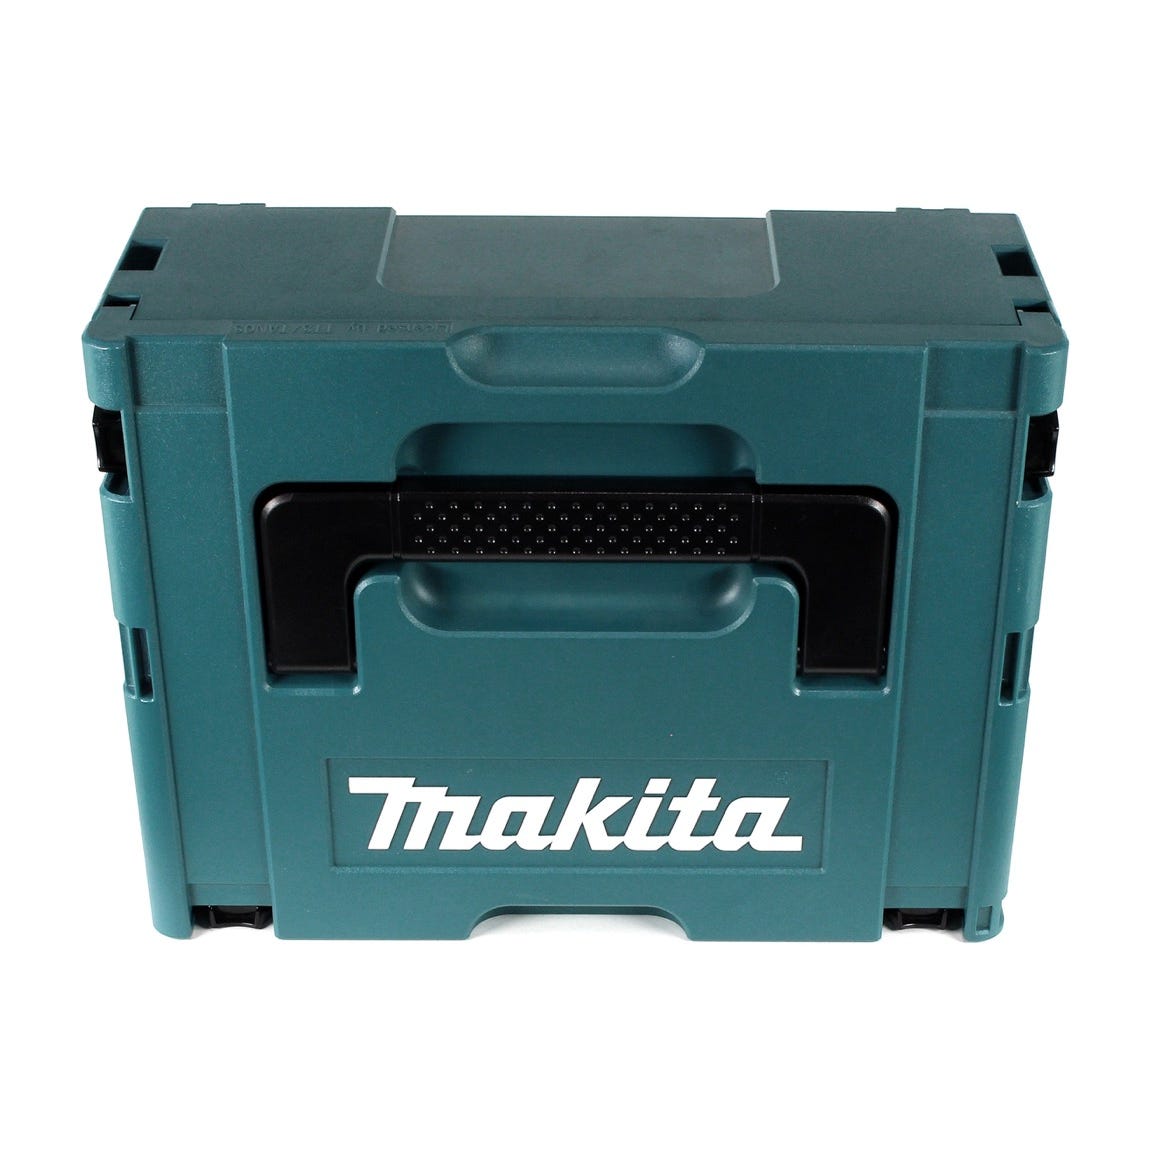 Makita DDF 485 T1J 18 V Li-Ion Perceuse visseuse sans fil Brushless 13 mm + Coffret MakPac + 1 x Batterie 5,0 Ah - sans 2